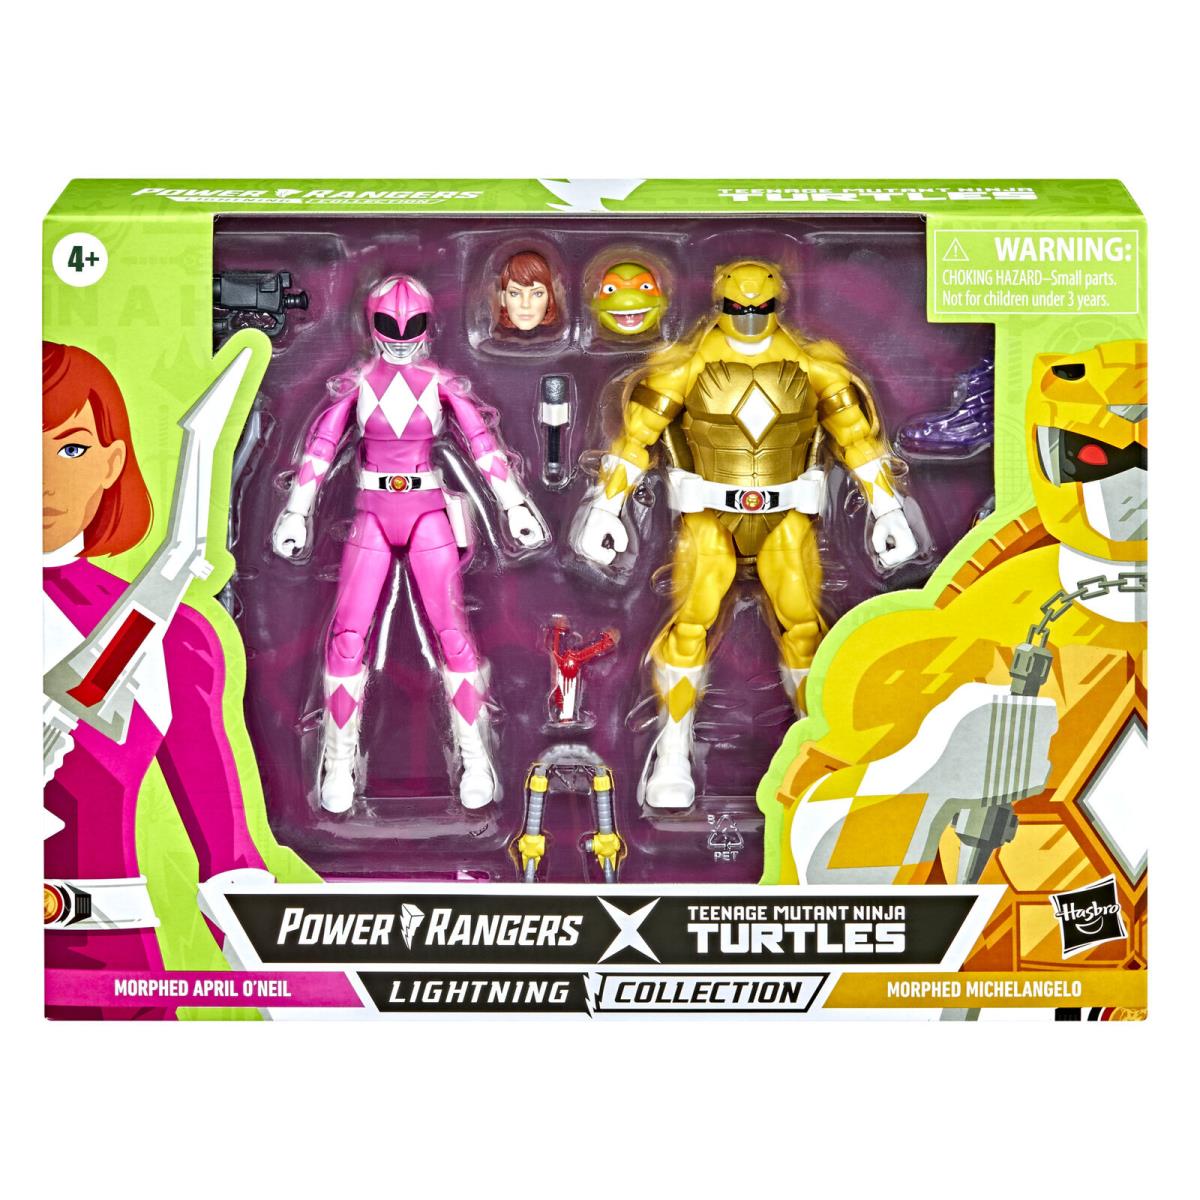 Power Rangers X Teenage Mutant Ninja Turtles Lightning Collection Morphed